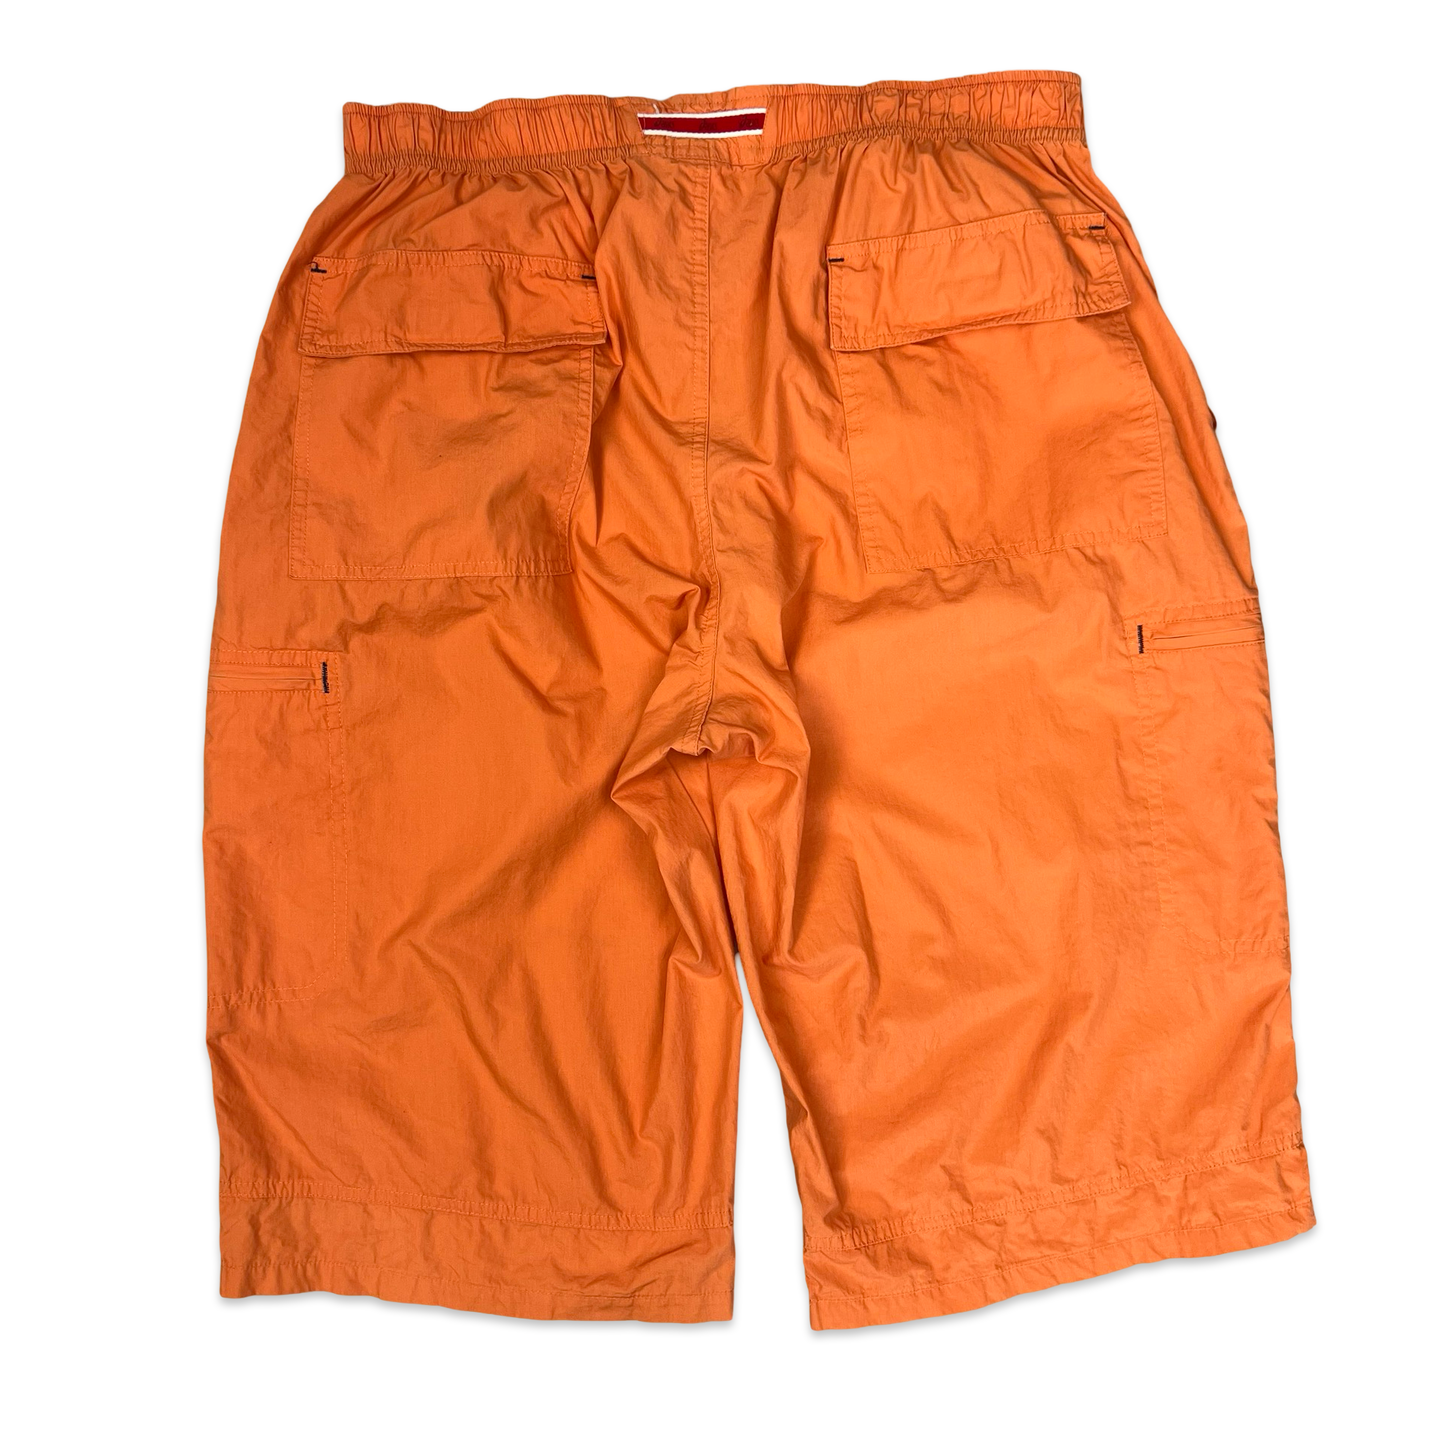 Asics Orange Cargo Sport Shorts XL